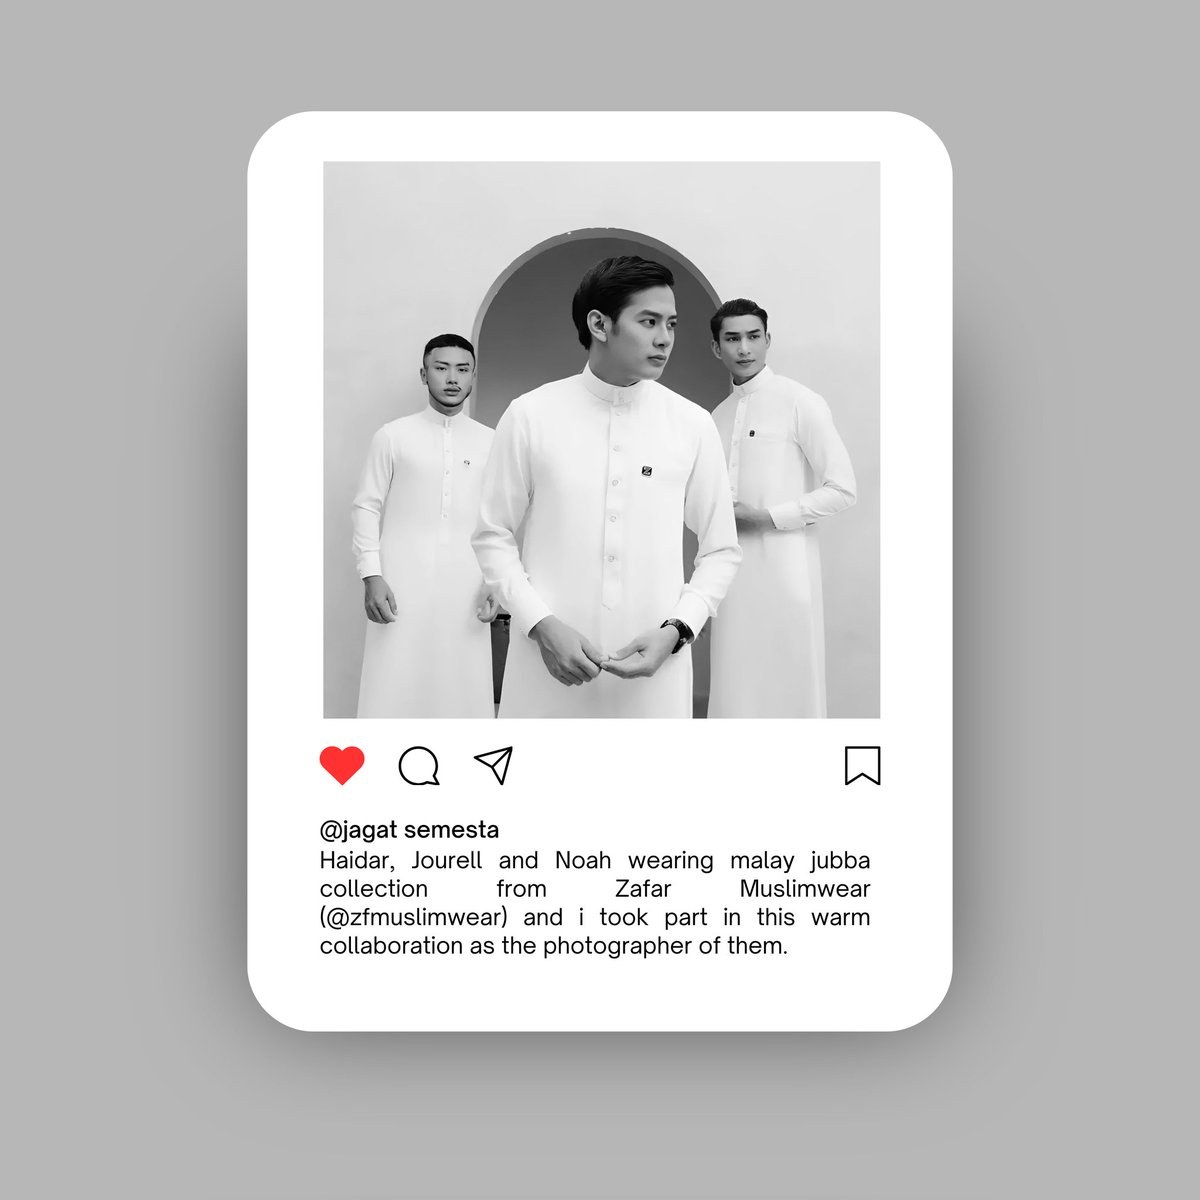 ️️ ️️
️️ ️️
️️ ️️
jagatsemesta instagram update

A warm photoshoot collaboration between Haidar (@apcvision), Jourell (@illustionalism) and Noah (@BlANCXRED) wearing jubba collection from Zafar Muslimwear (@zfmuslimwear).